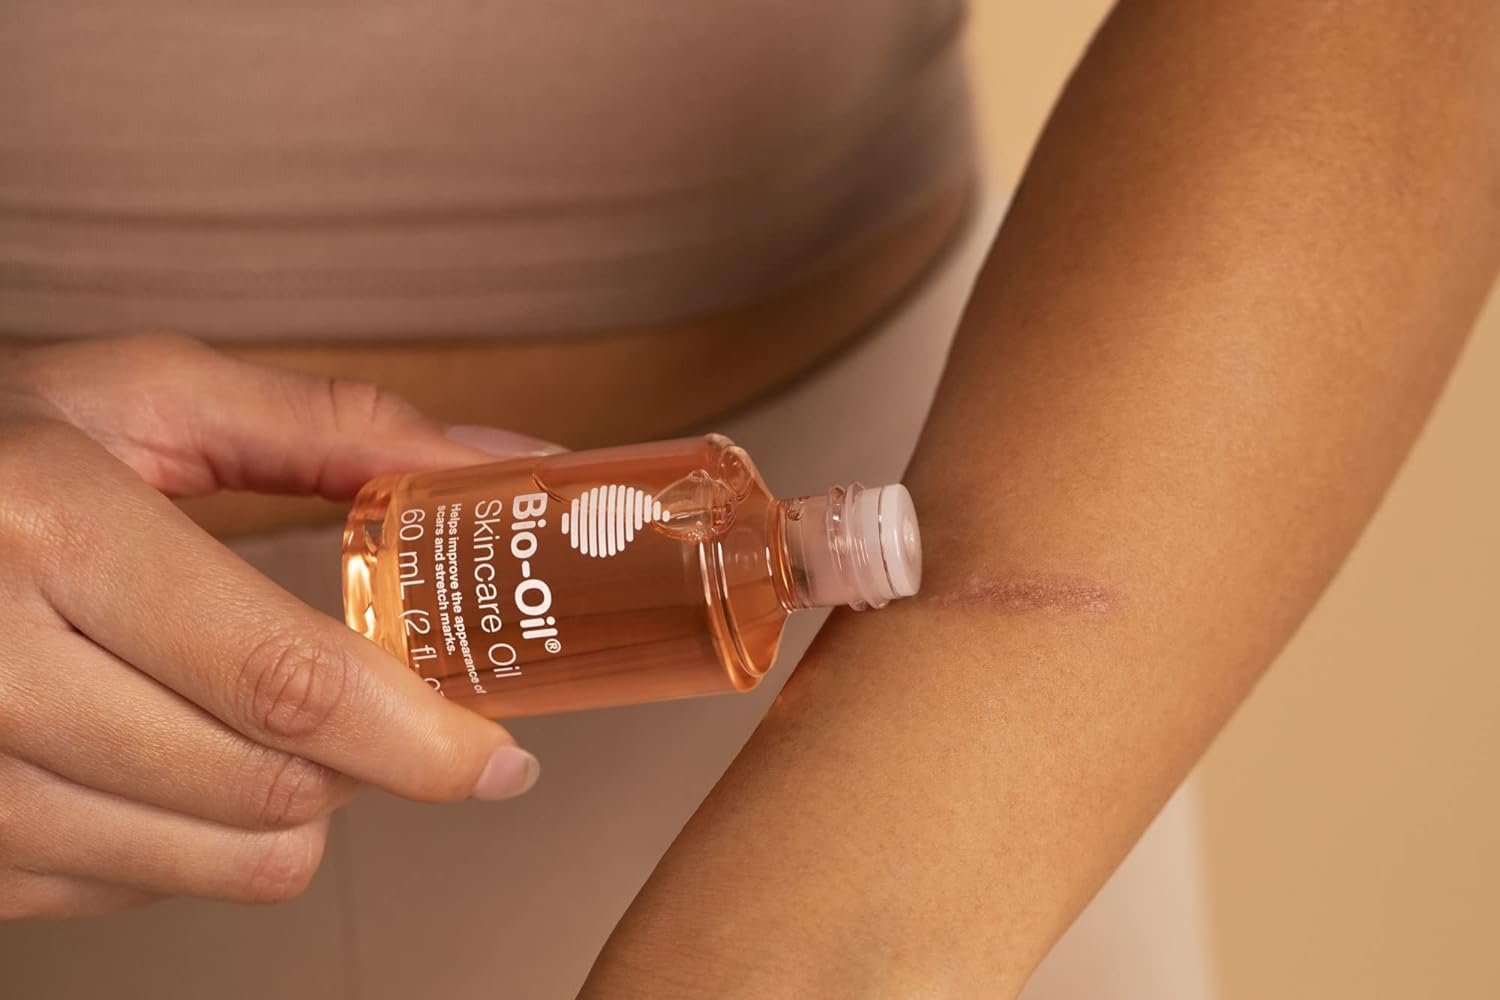 bio oil skincare body oil vitamin e serum for scars stretchmarks dermatologist recommended all skin types 67 ozbr scent